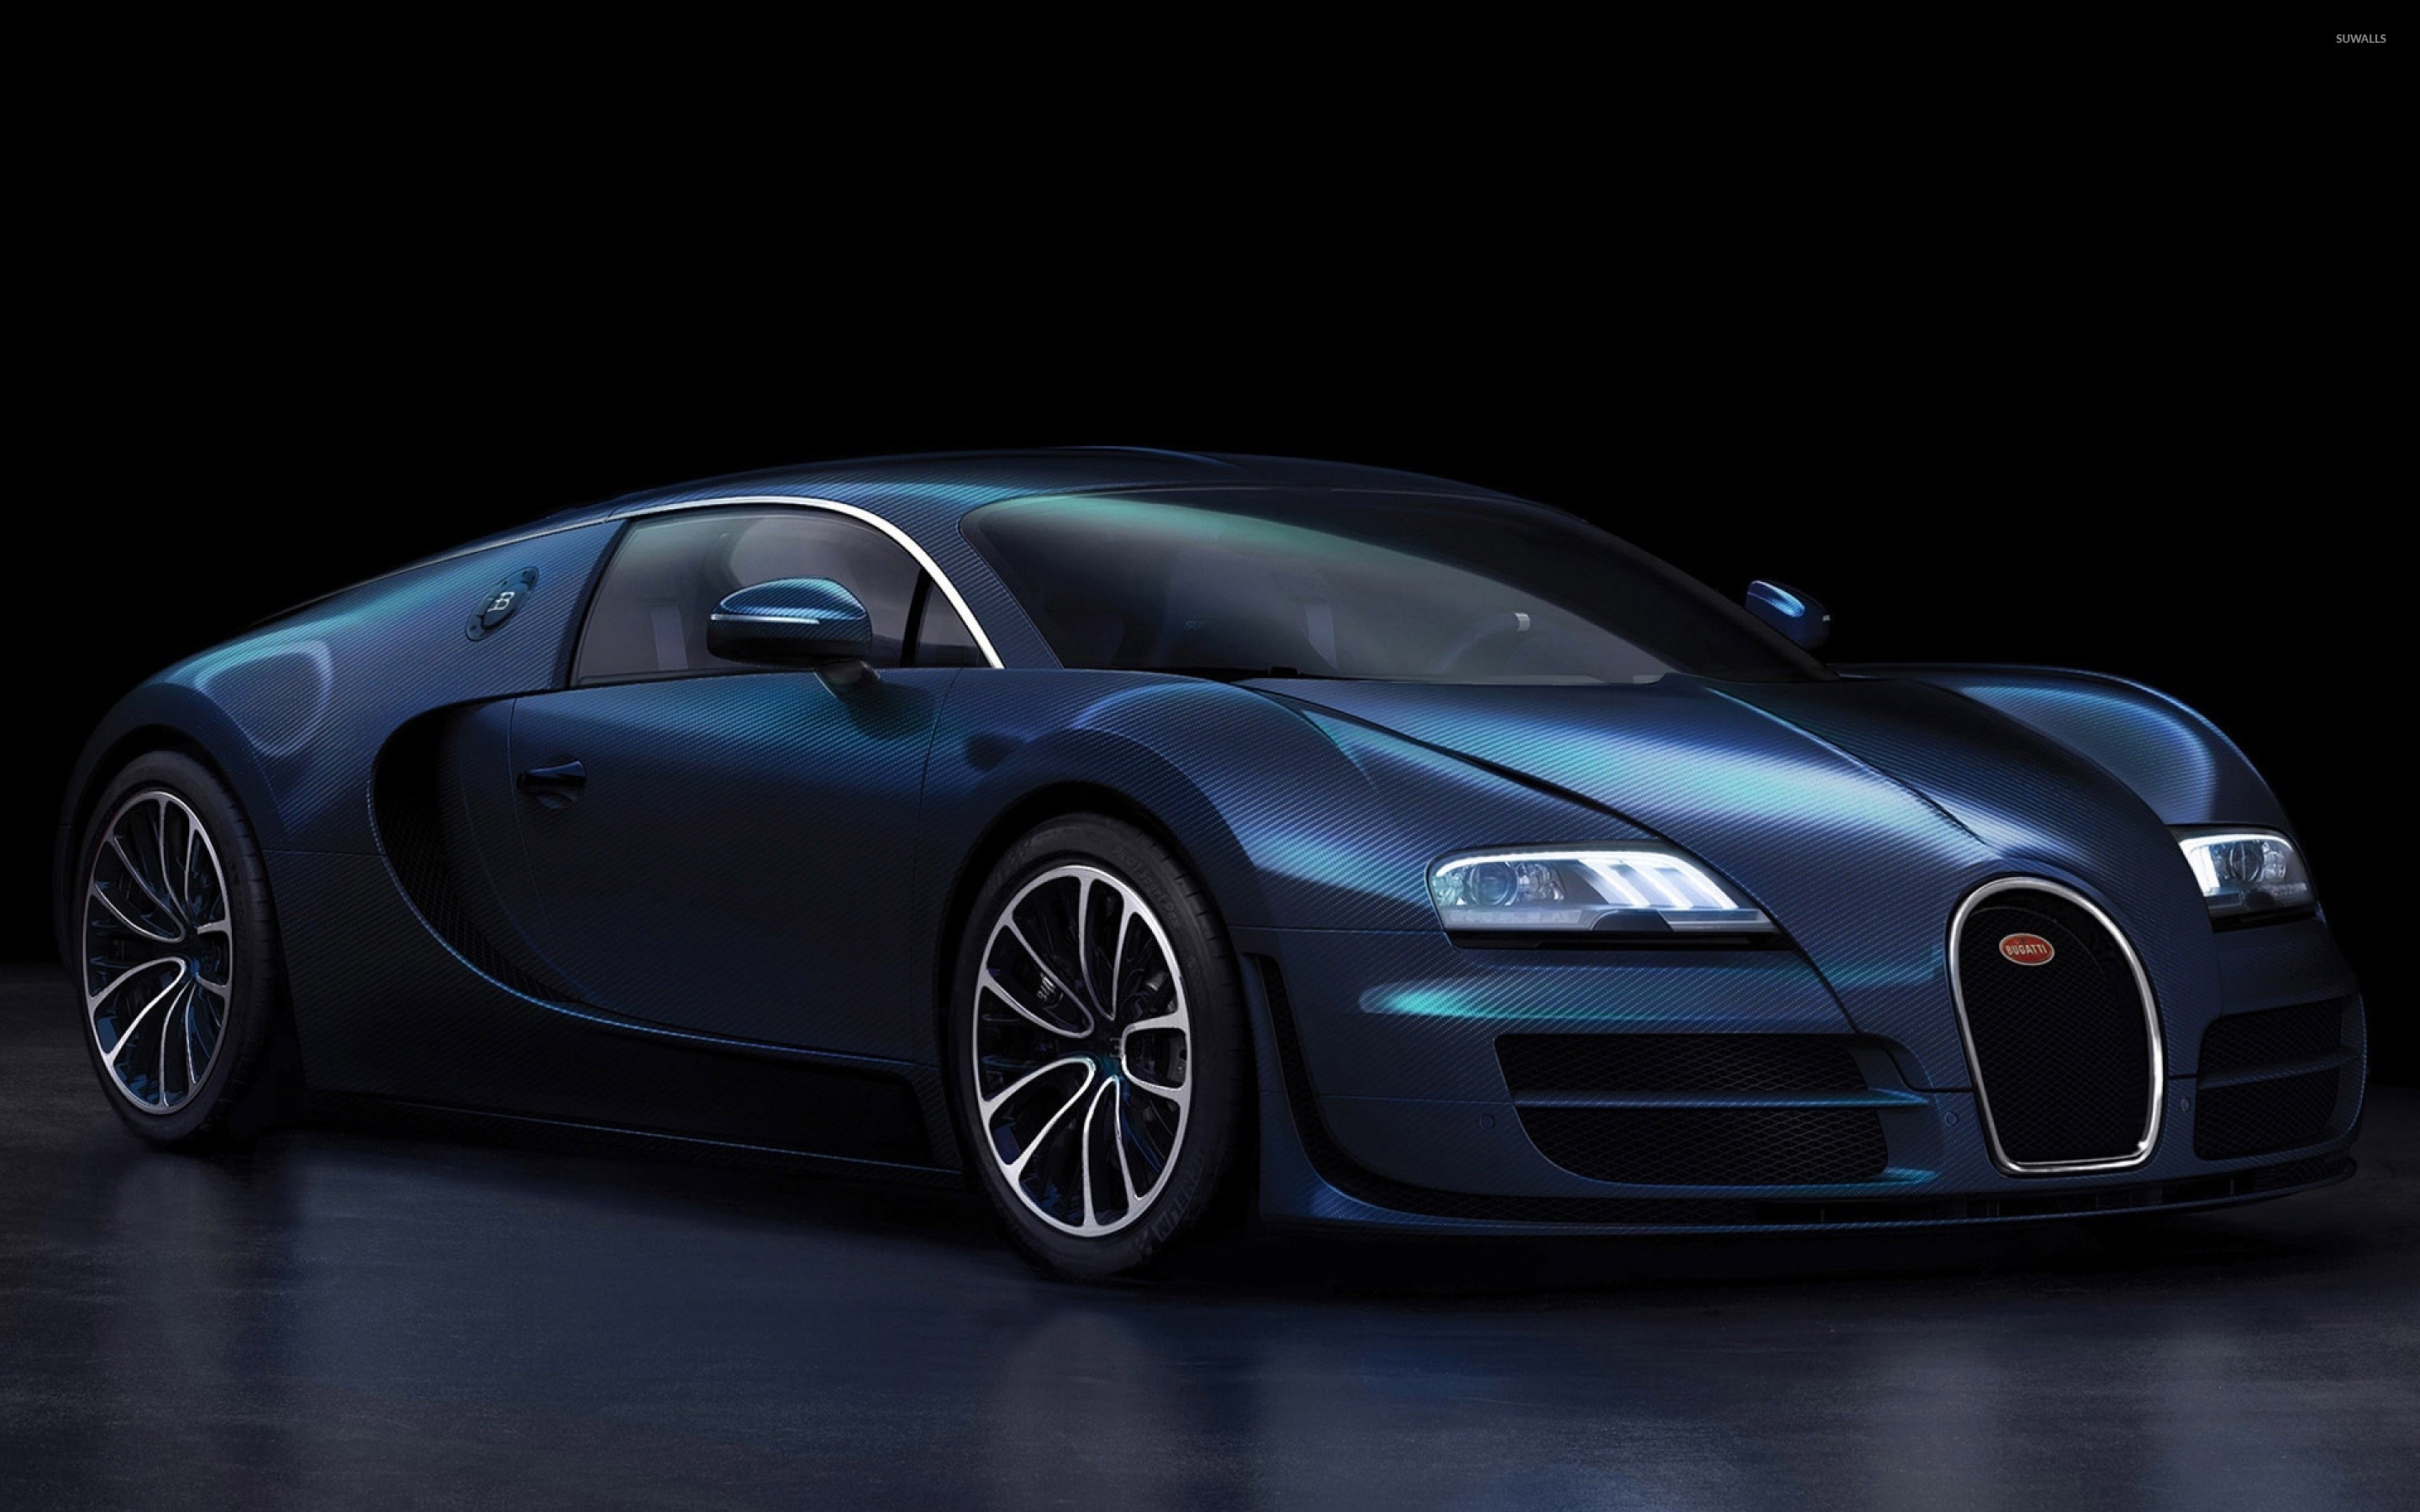 2880x1800 Dark blue Bugatti Veyron front side view wallpaper